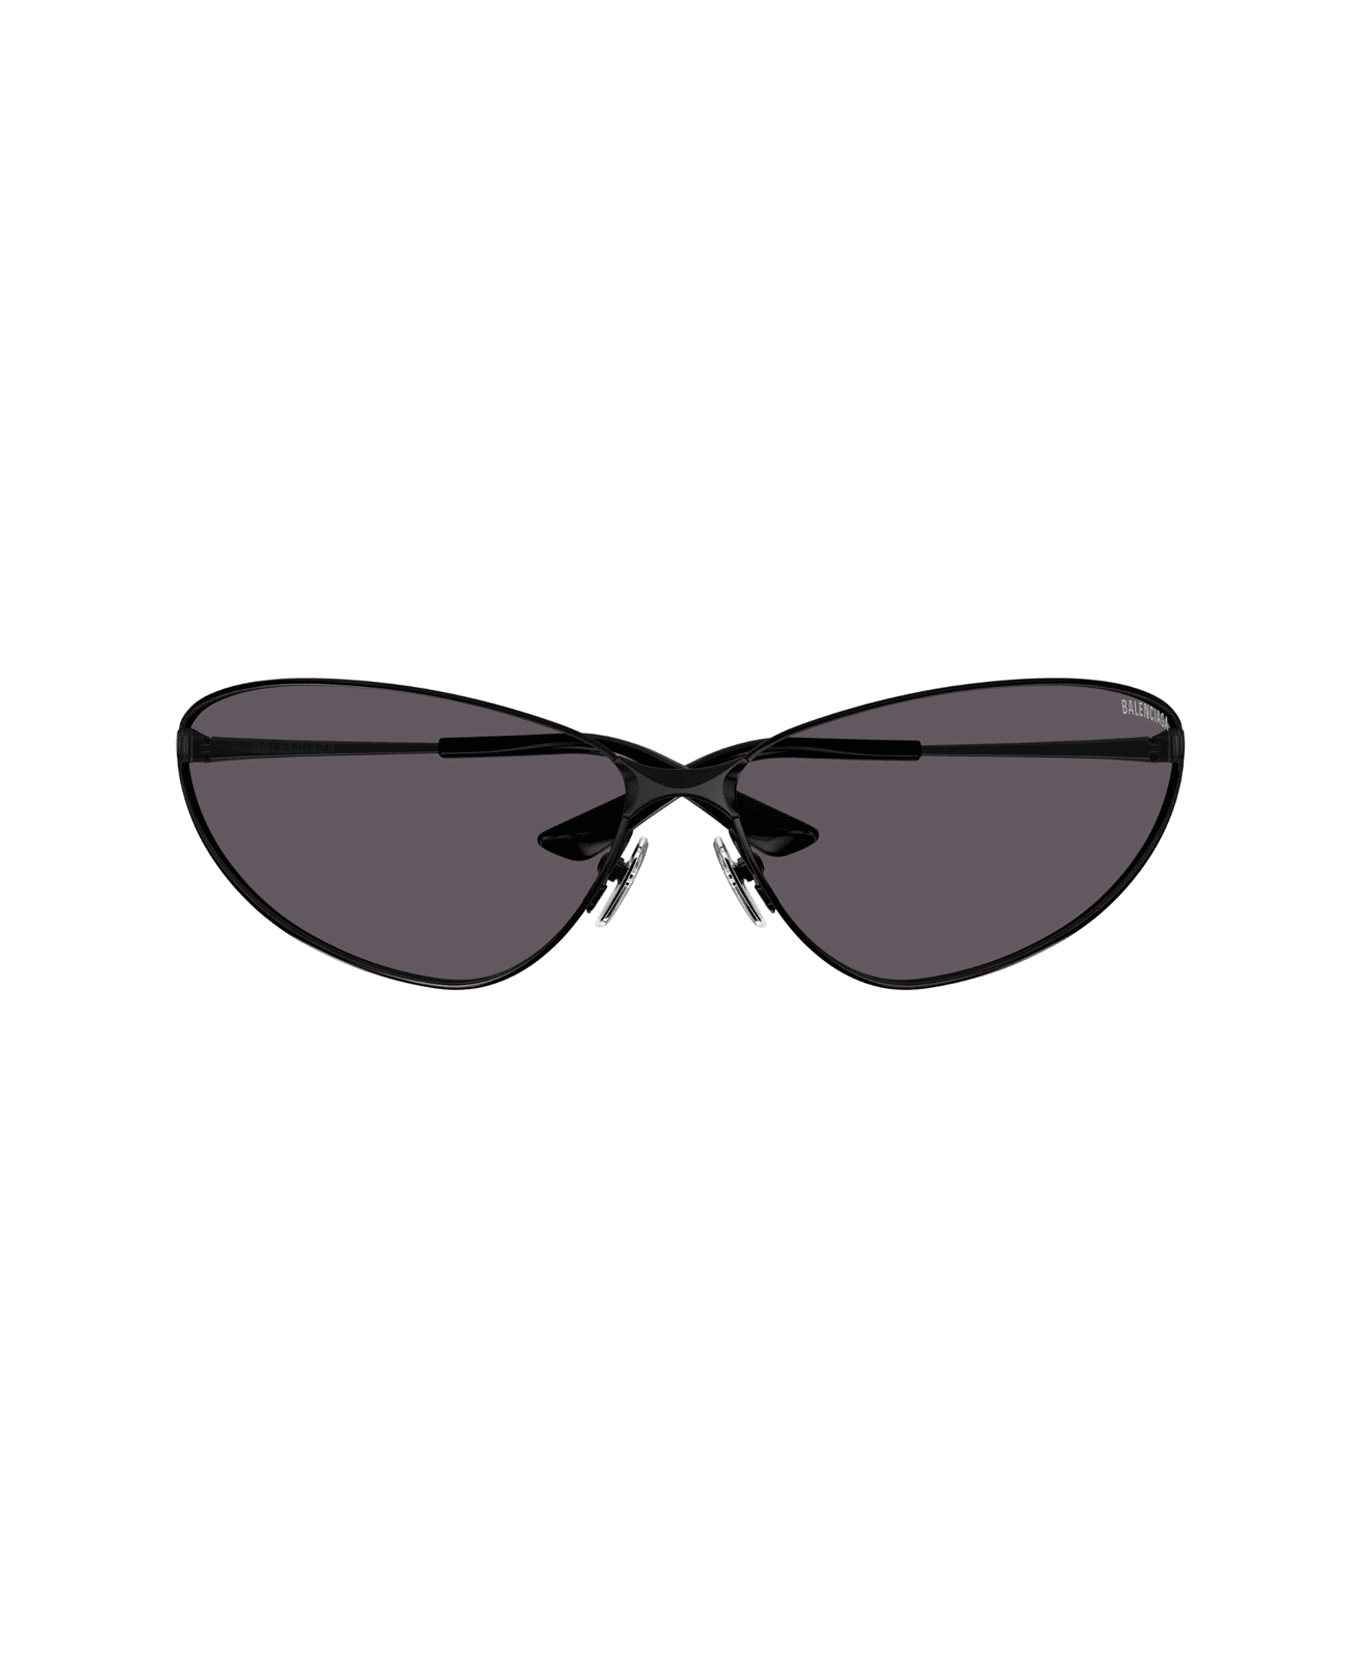 Balenciaga Eyewear Bb0315s Razor-linea Extreme 002 Sunglasses - Nero